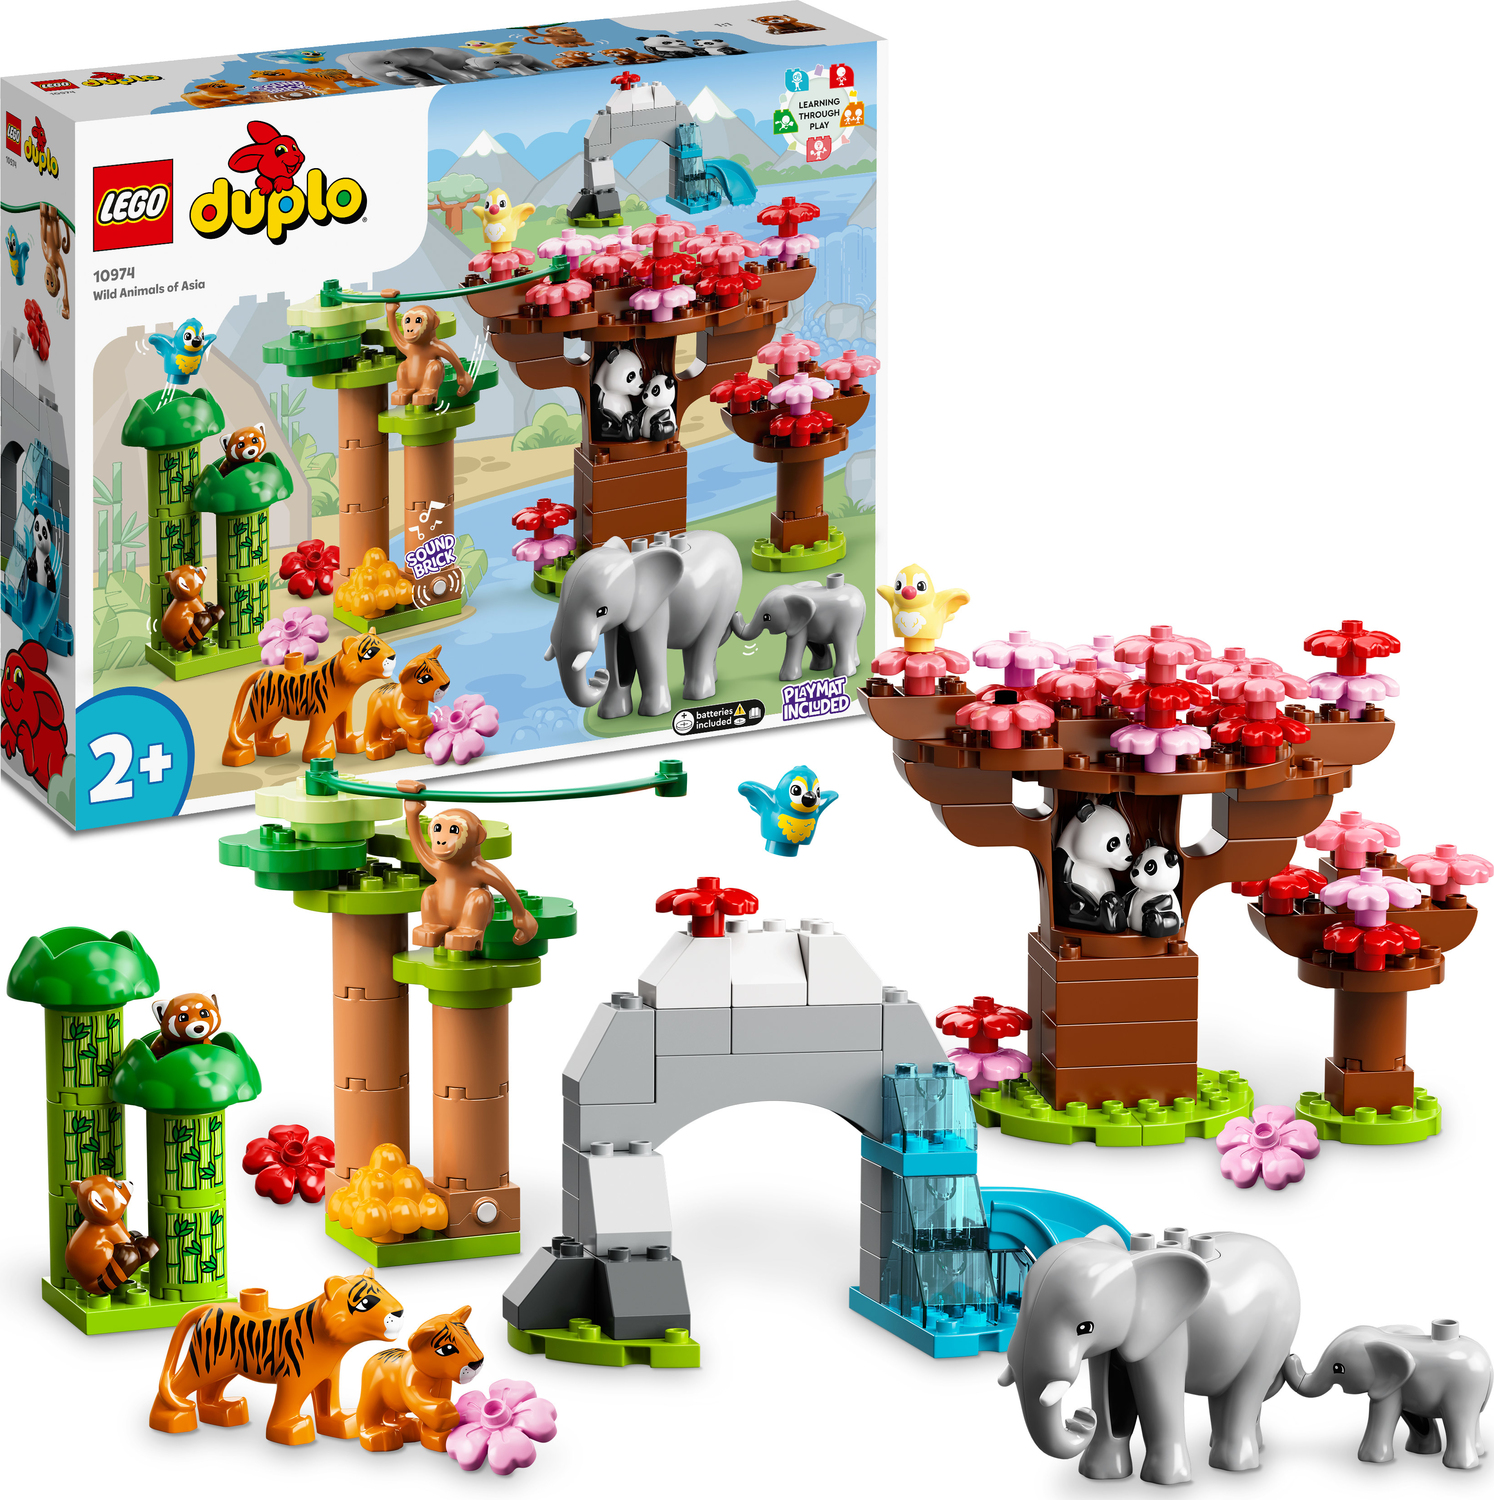 LEGO DUPLO Wild Animals of Asia Animal Toy Set from LEGO - School Crossing